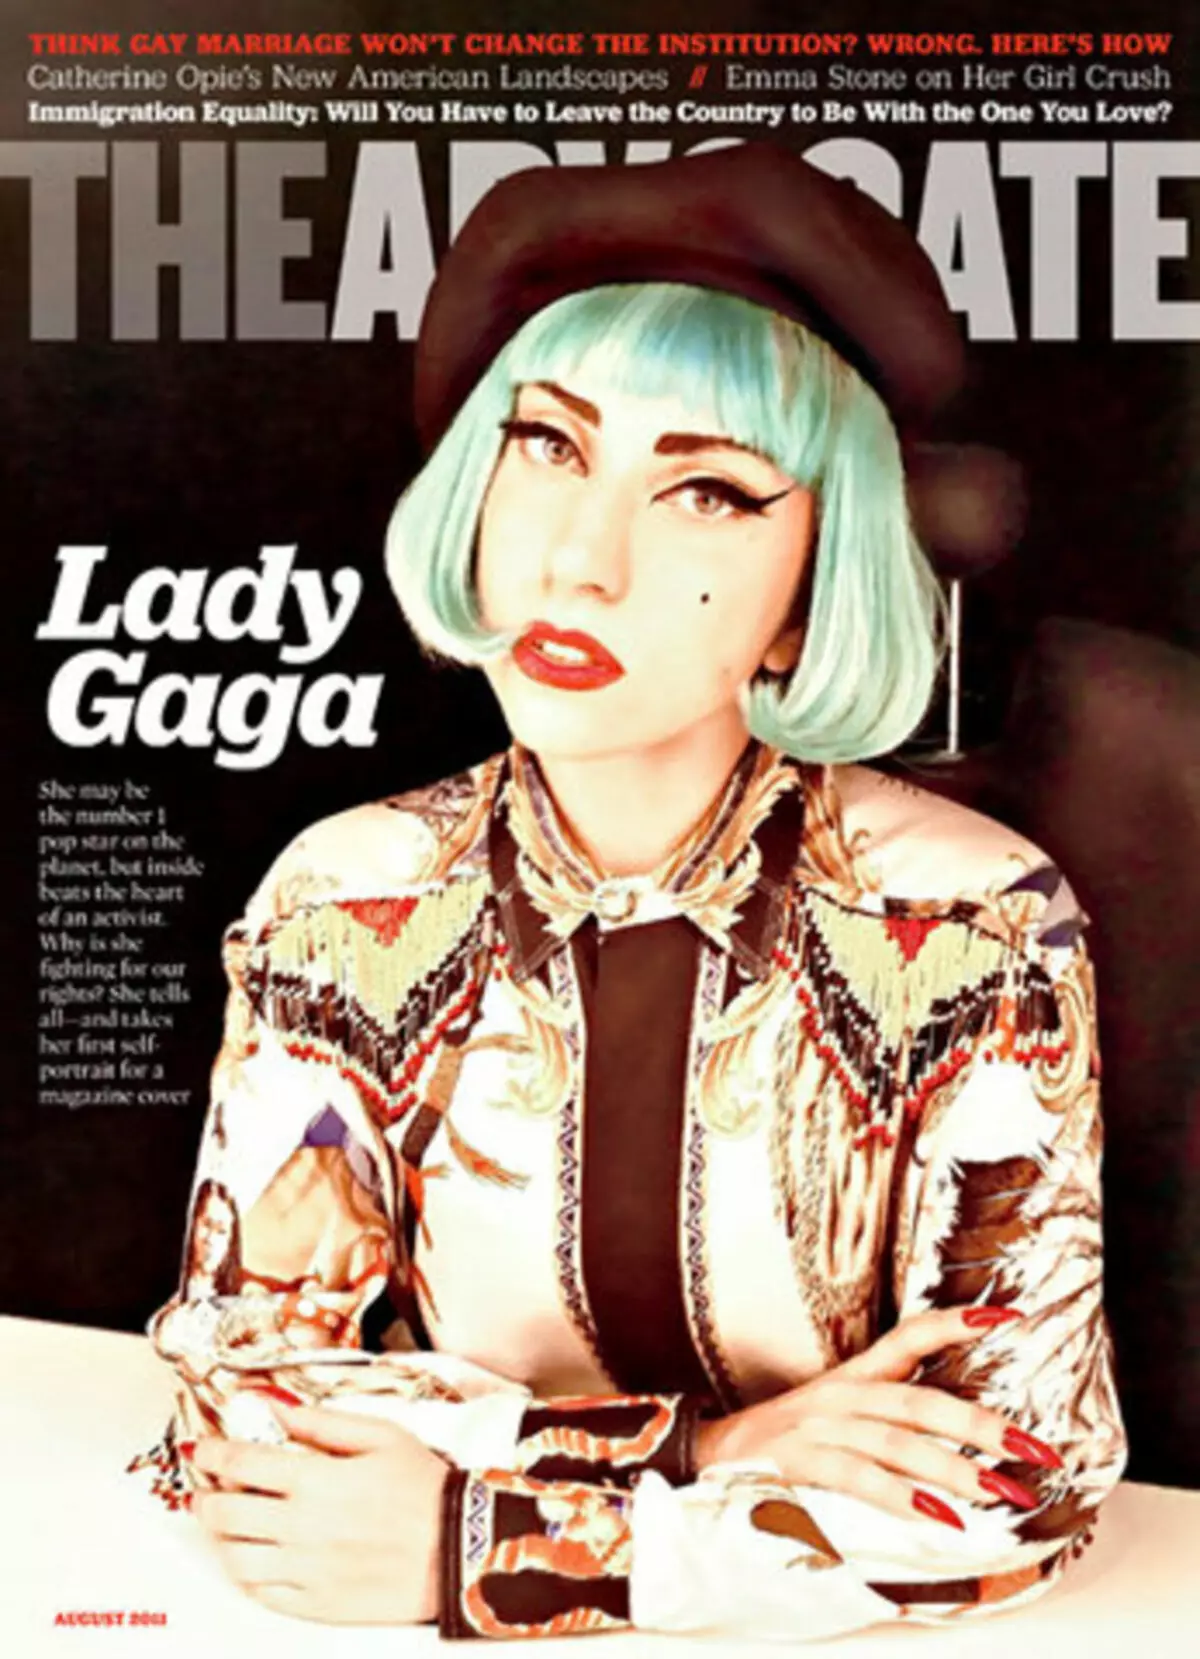 Lady Gaga သည်သူမလိင်တူချစ်သူအသိုင်းအဝိုင်းကိုကိုင်တွယ်သောကြေညာချက်တစ်ခုဖြင့်စိတ်ဆိုးခဲ့သည်